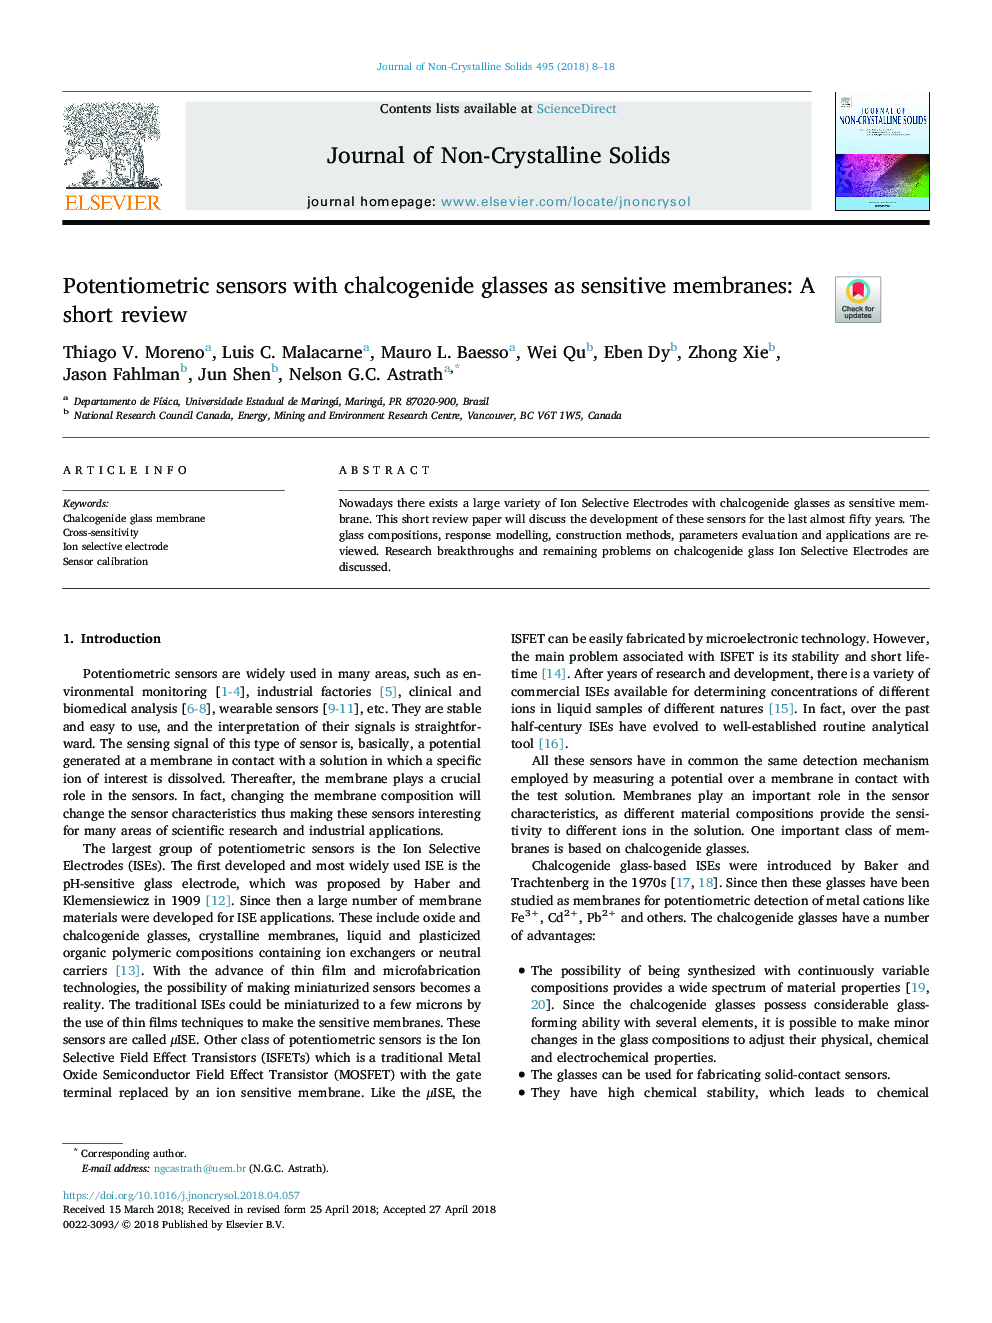 Potentiometric sensors with chalcogenide glasses as sensitive membranes: A short review